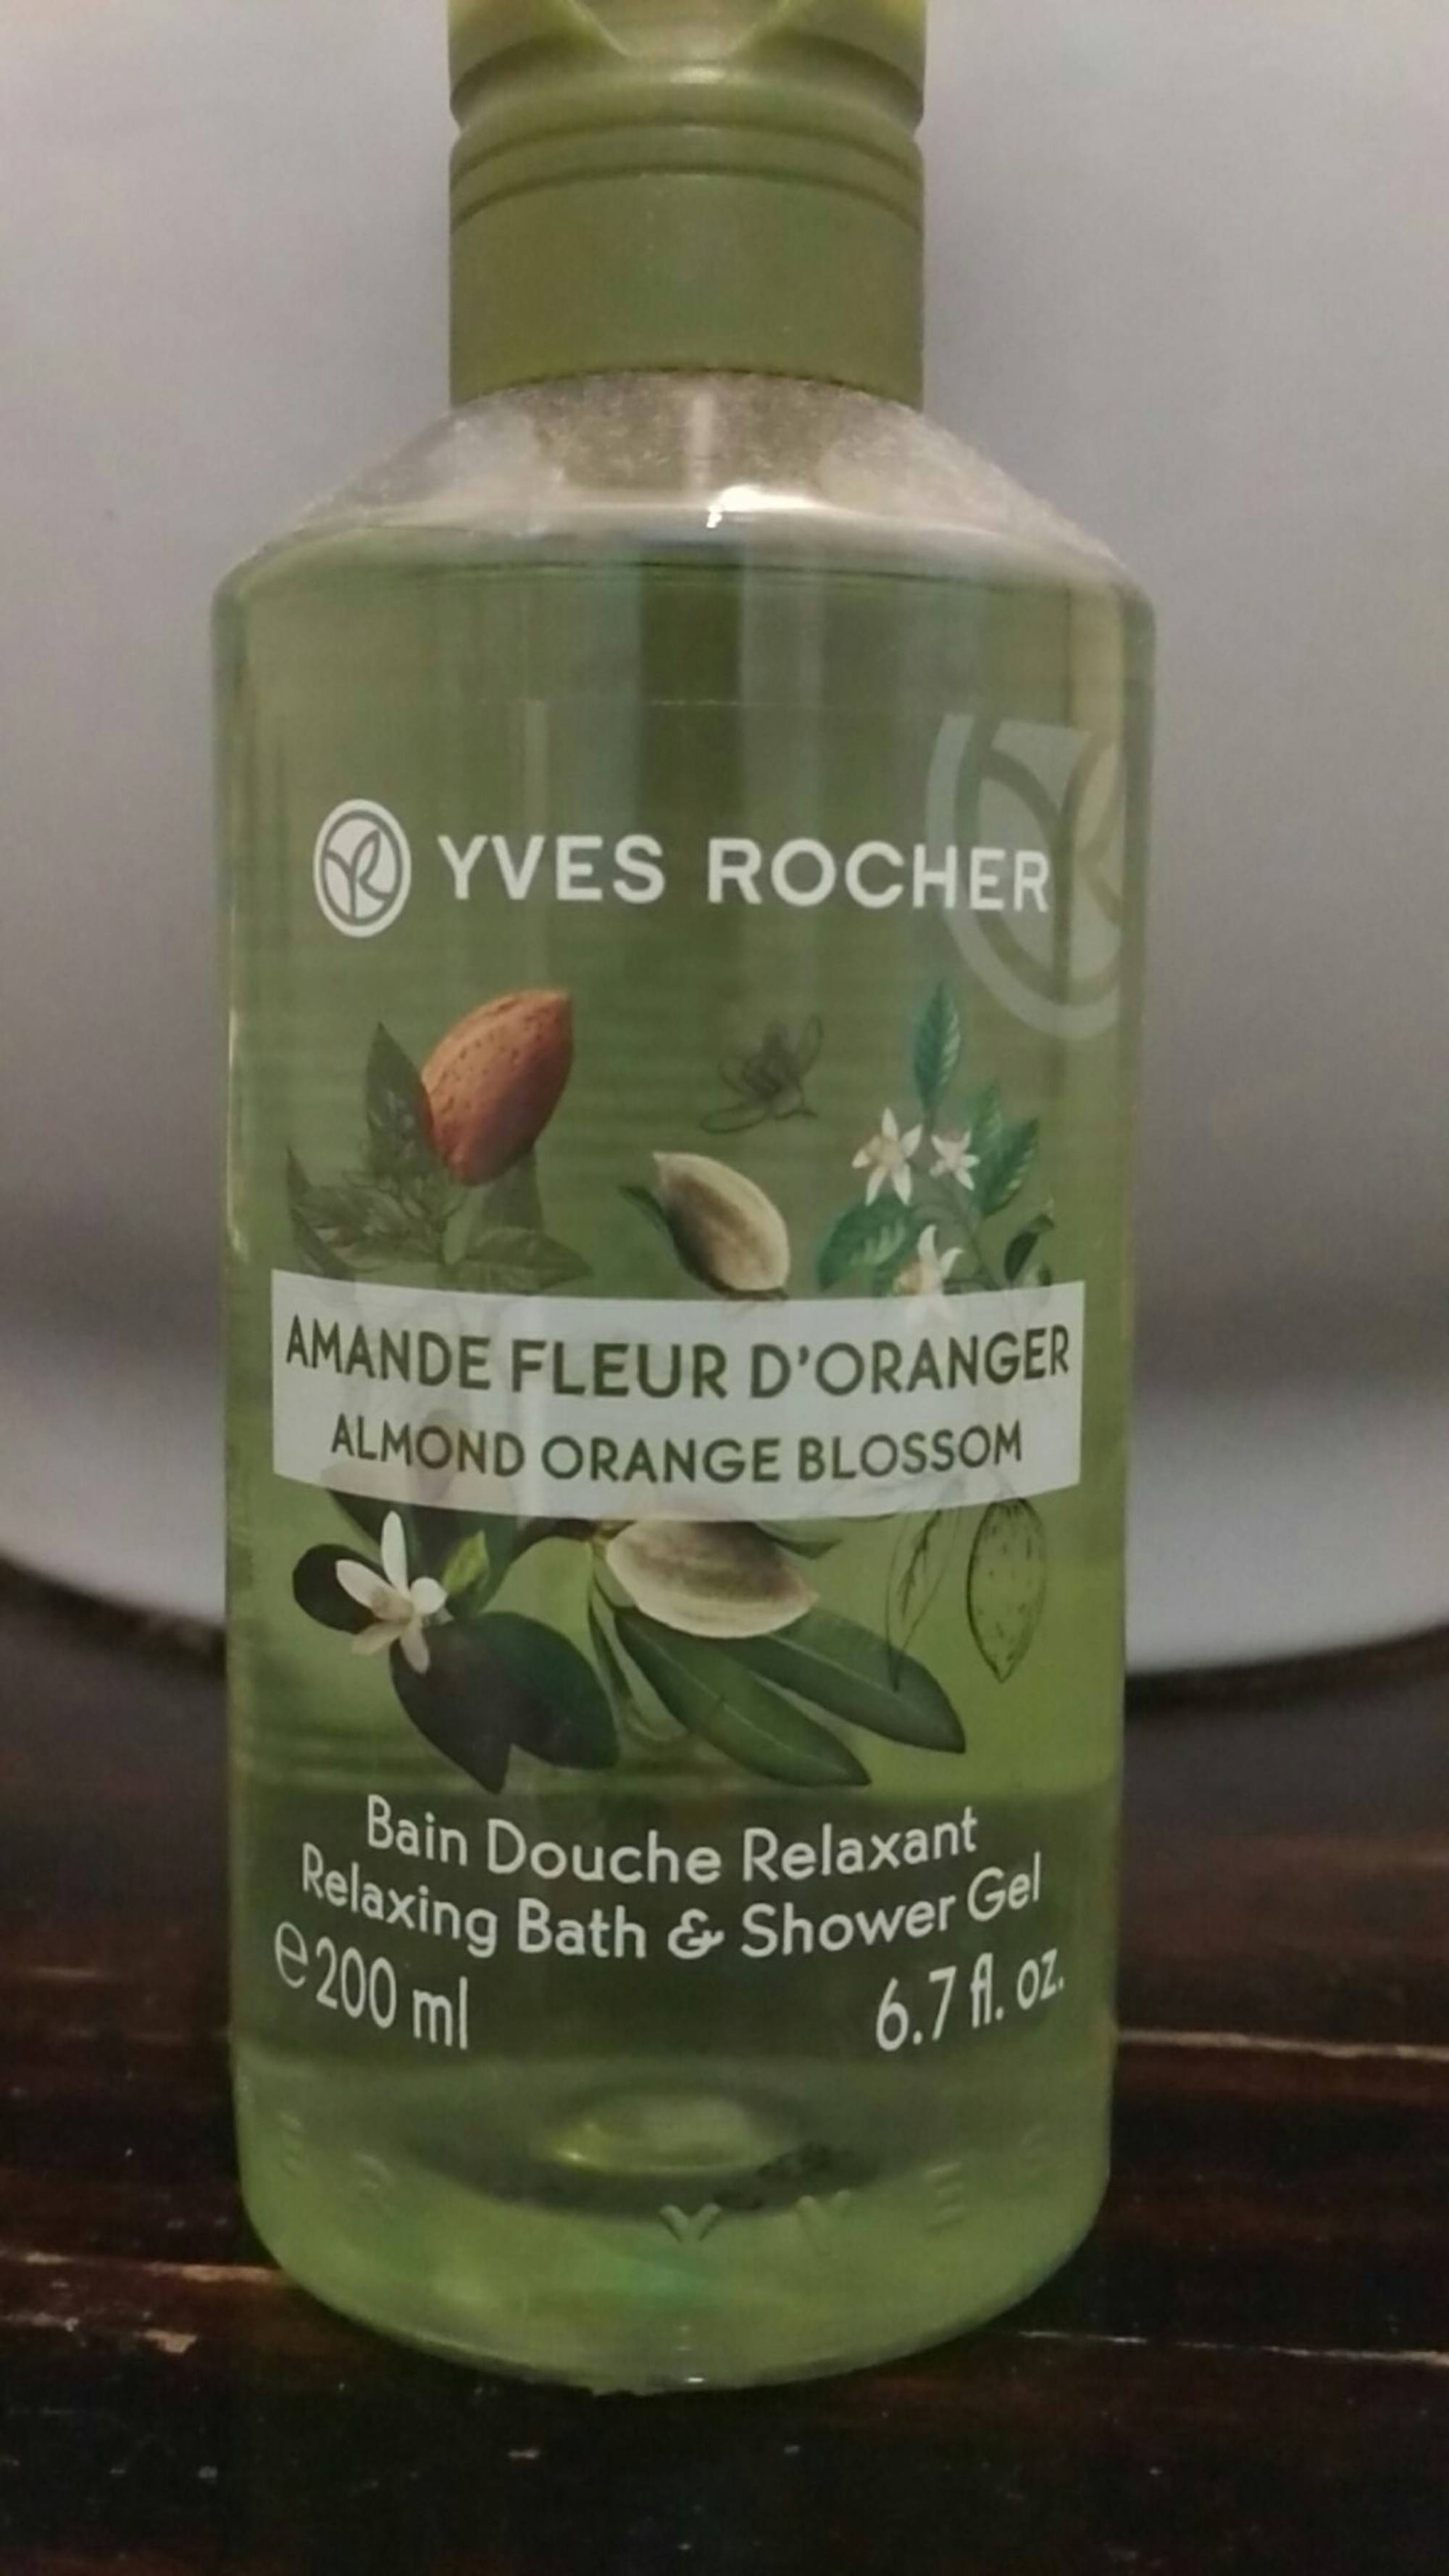 YVES ROCHER - Amande fleur d'oranger - Bain douche relaxant